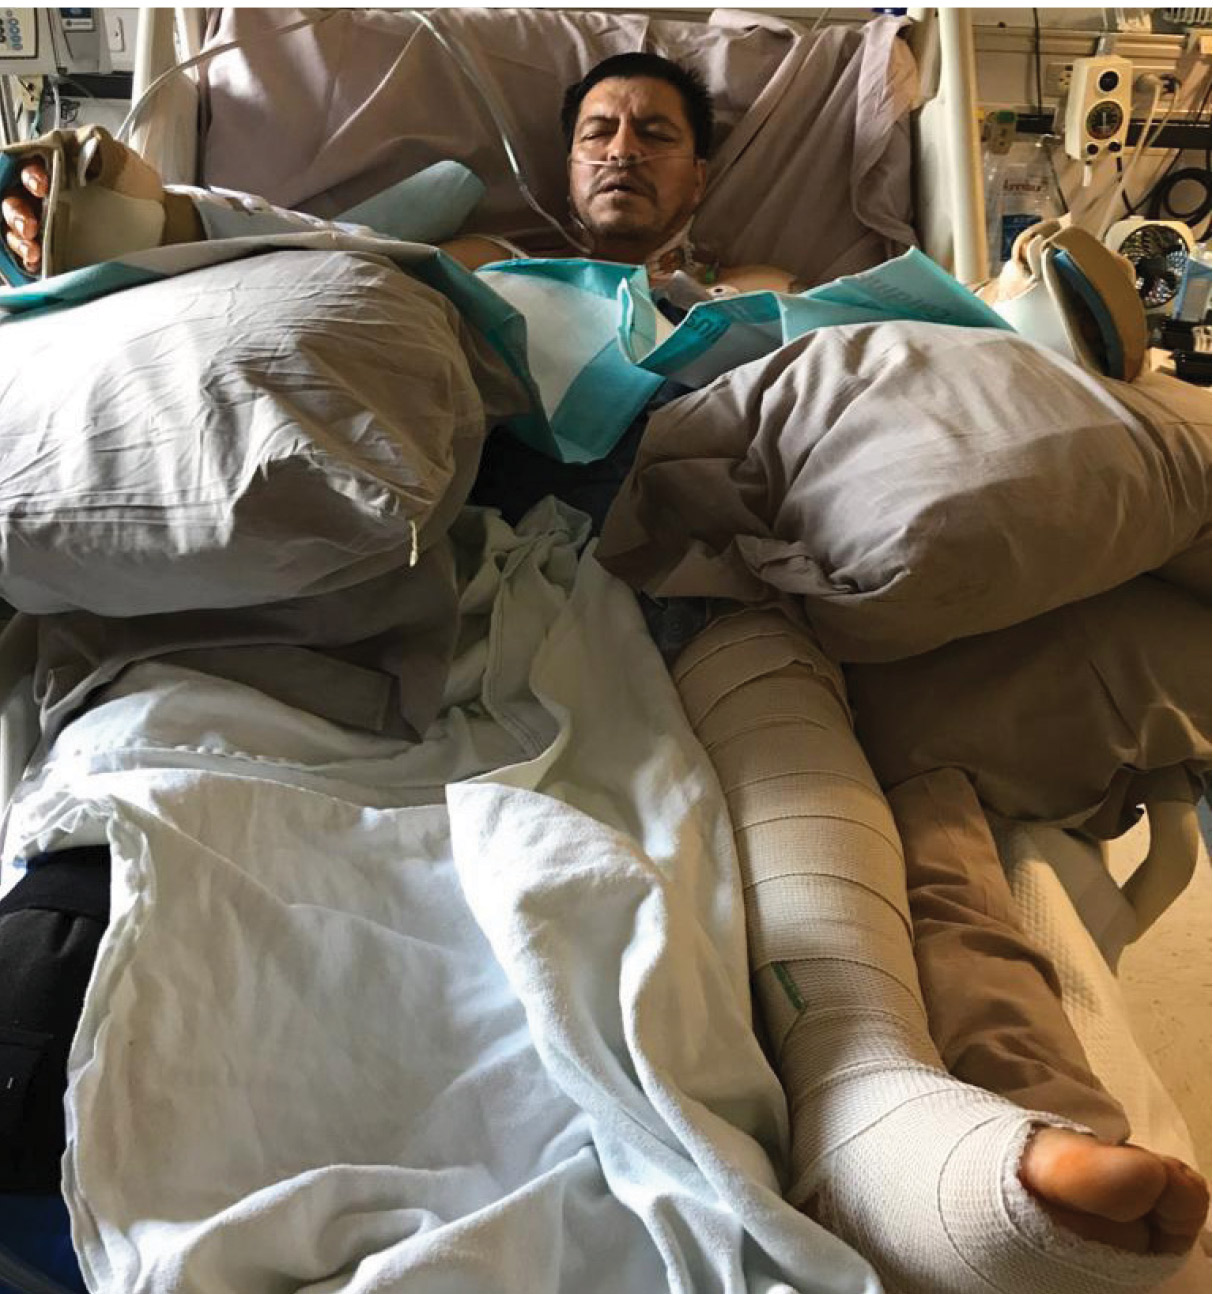 Marcial Sanchez Romero in hospital